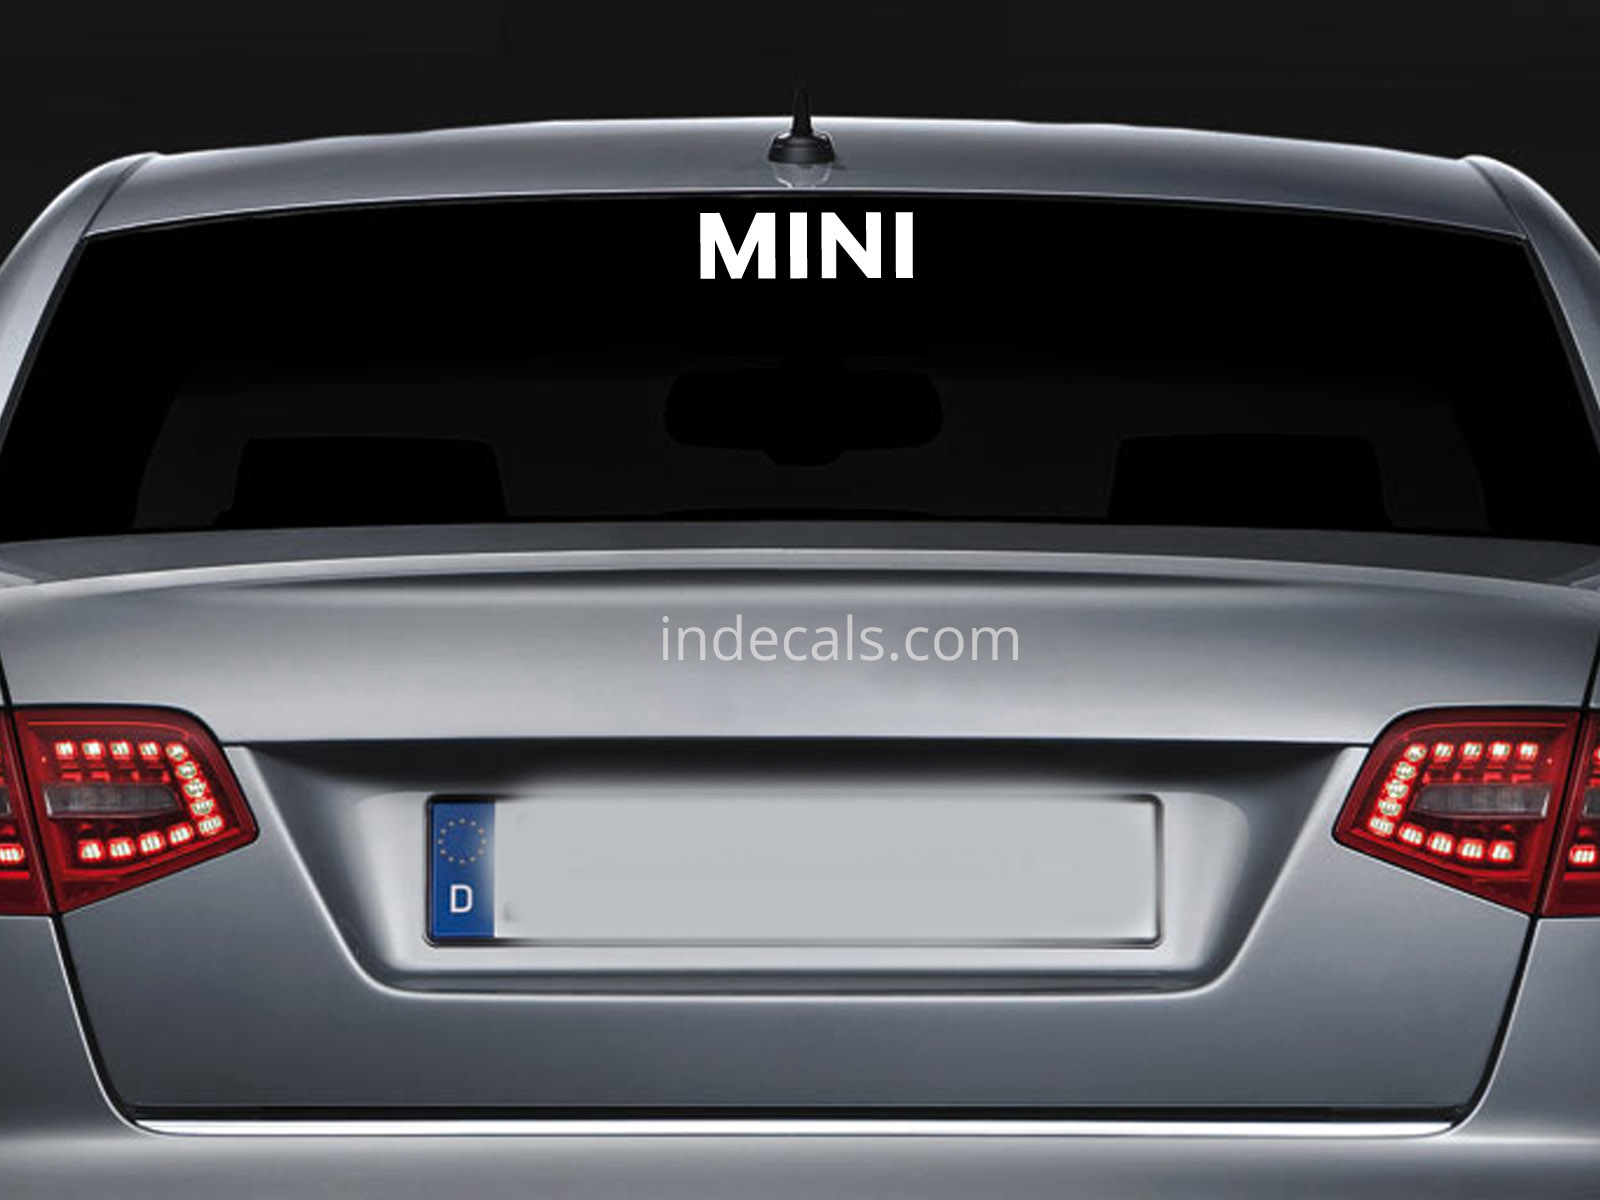 1 x Mini Sticker for Windshield or Back Window - White